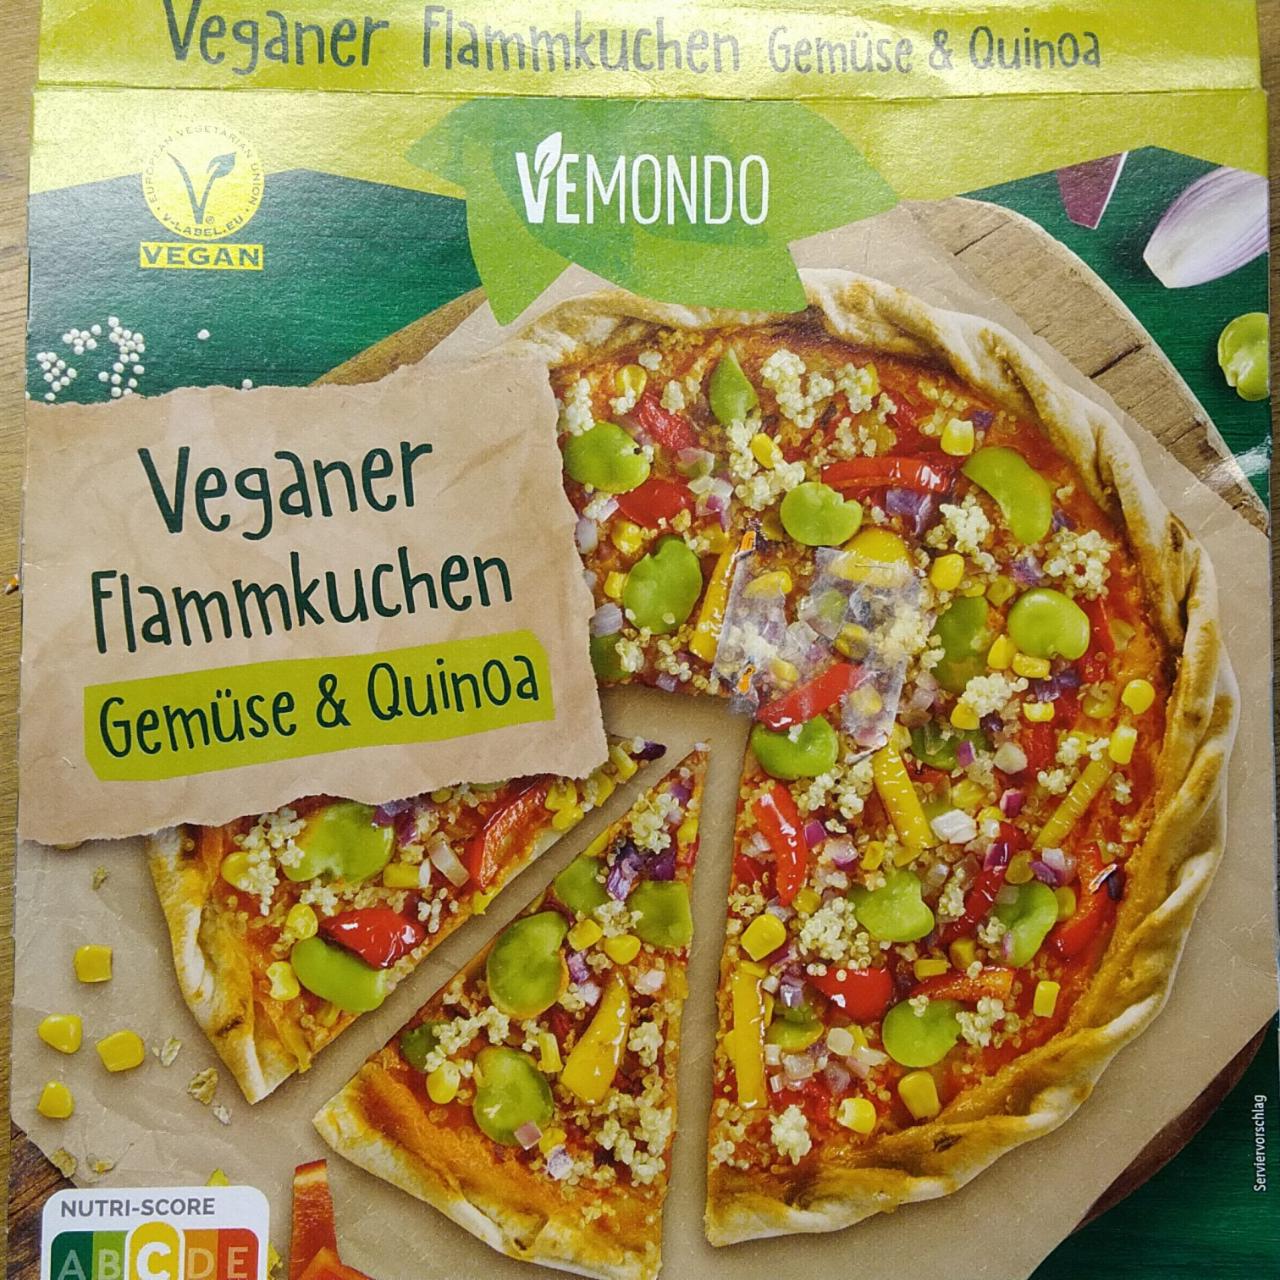 Fotografie - Veganer Flammkuchen gemuse&quinoa Vemondo